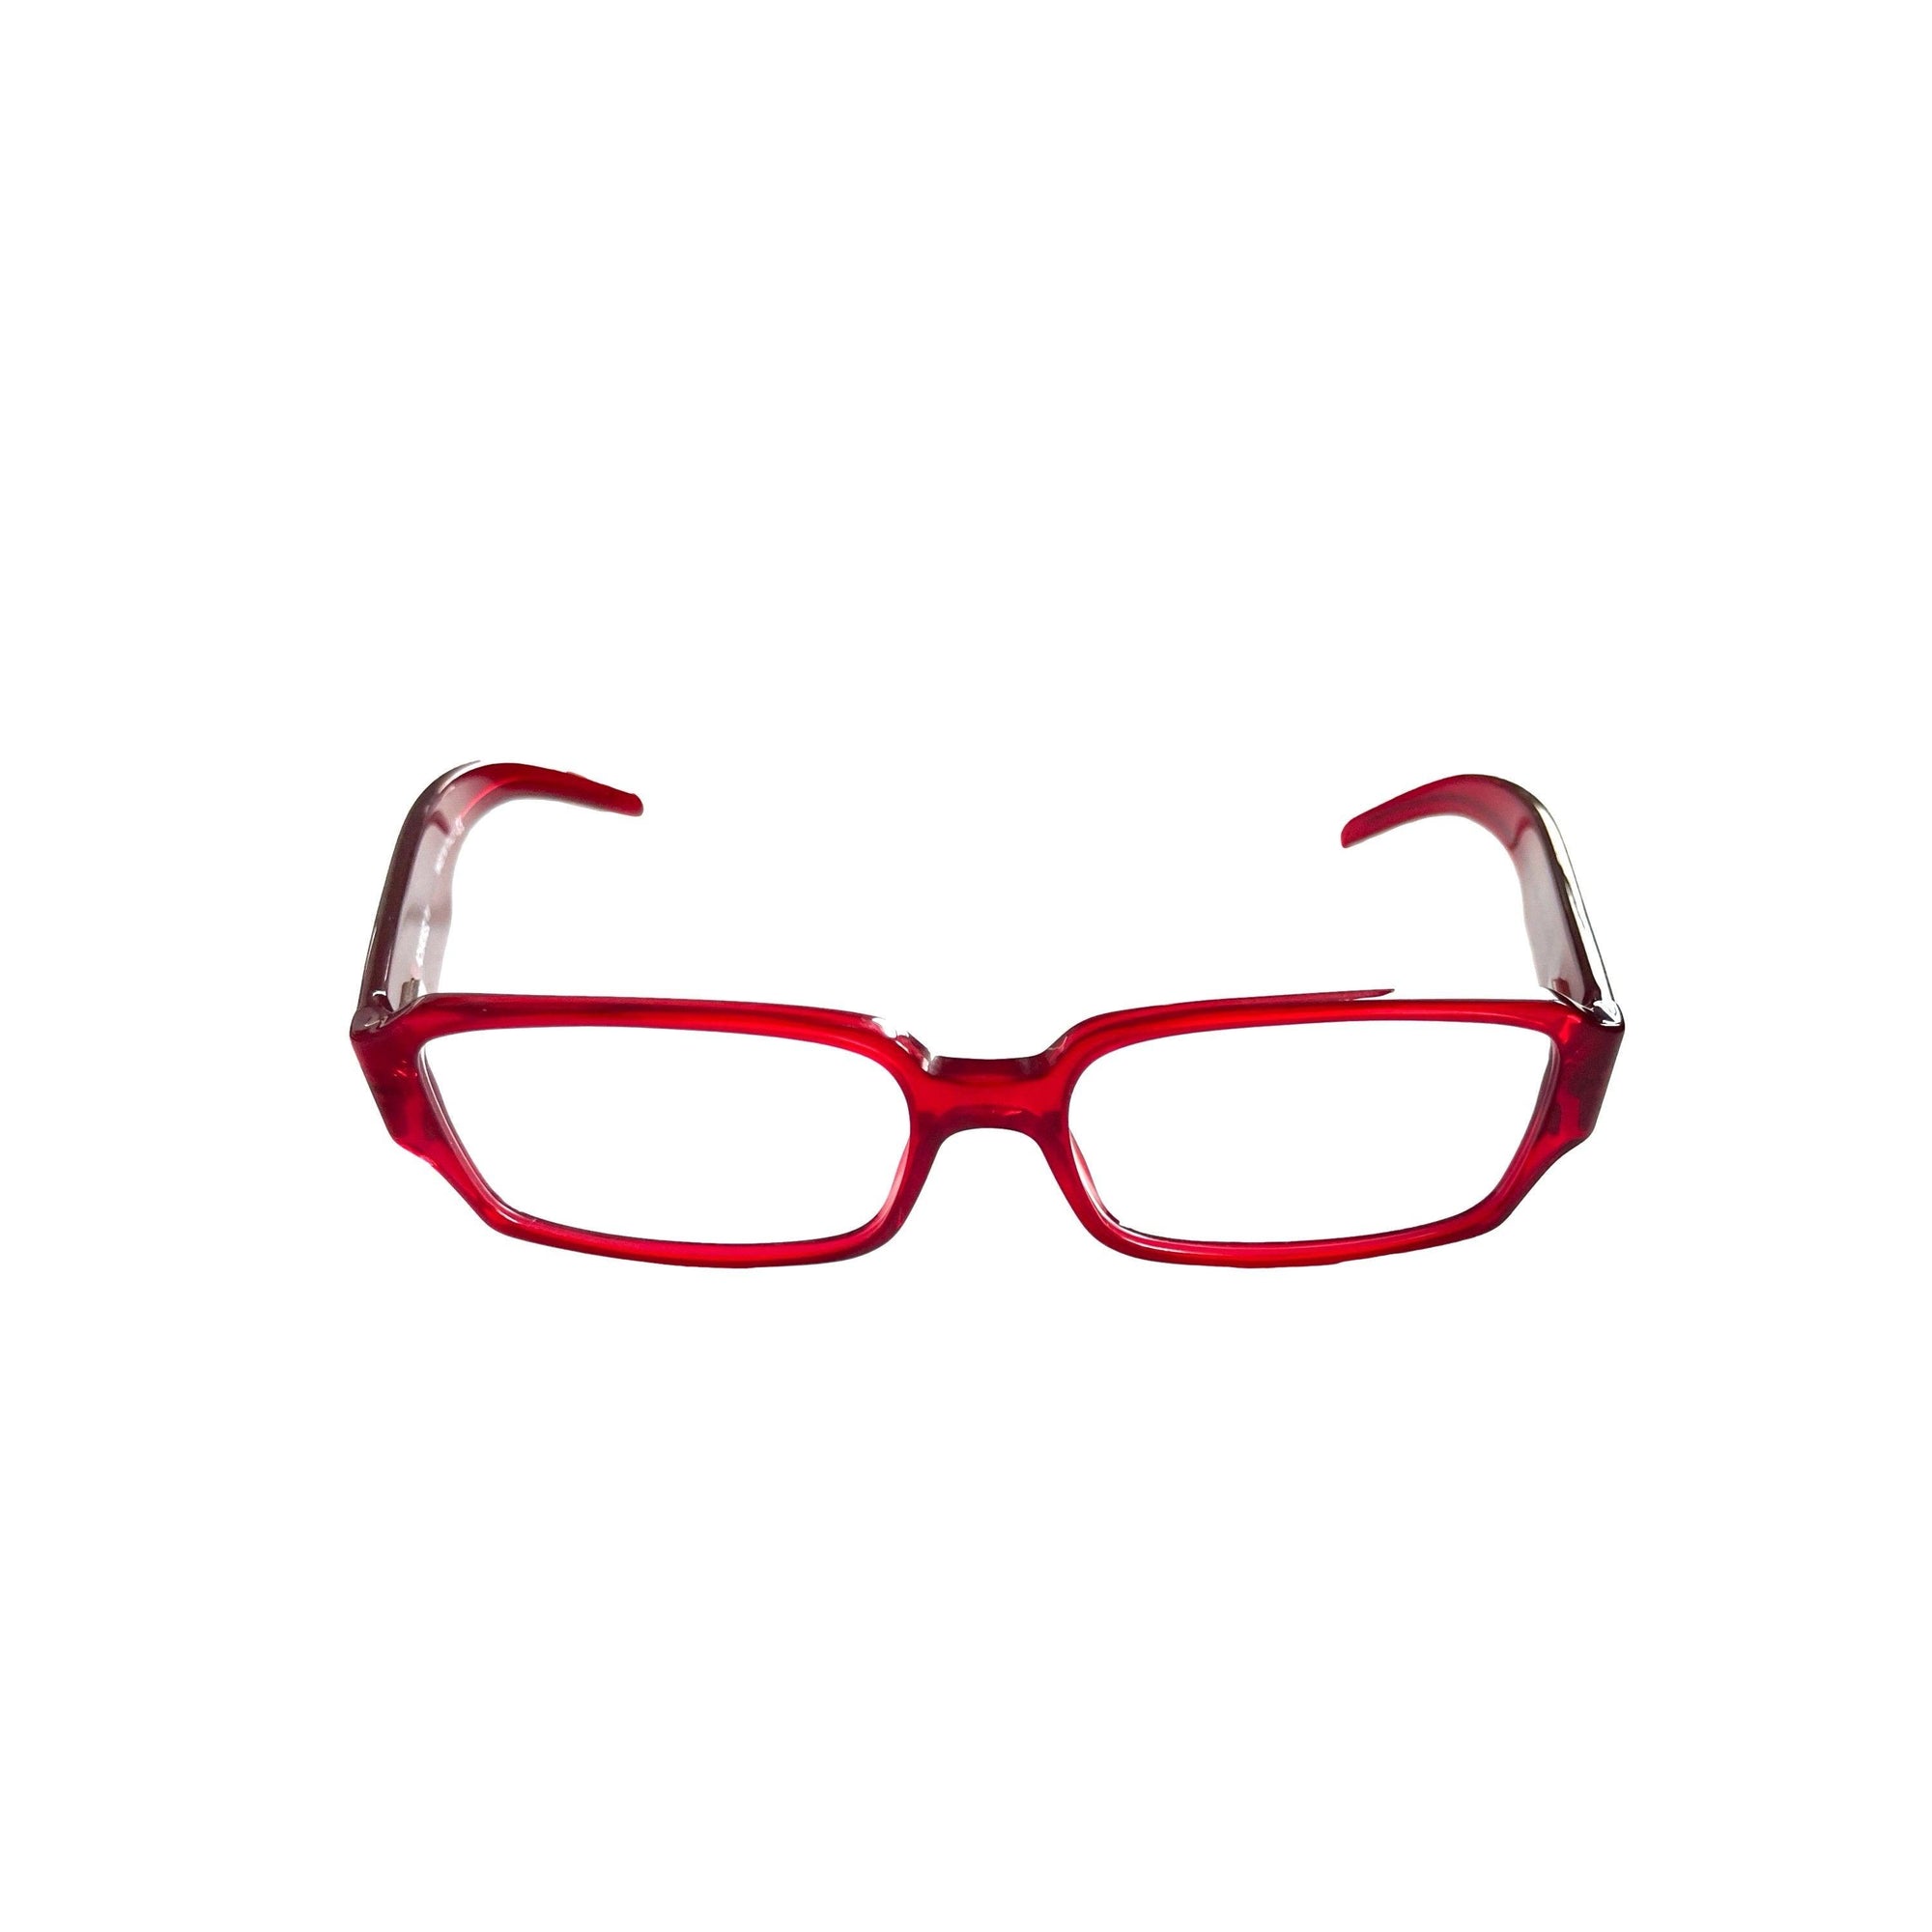 Chanel Red Rhinestone Slim Glasses